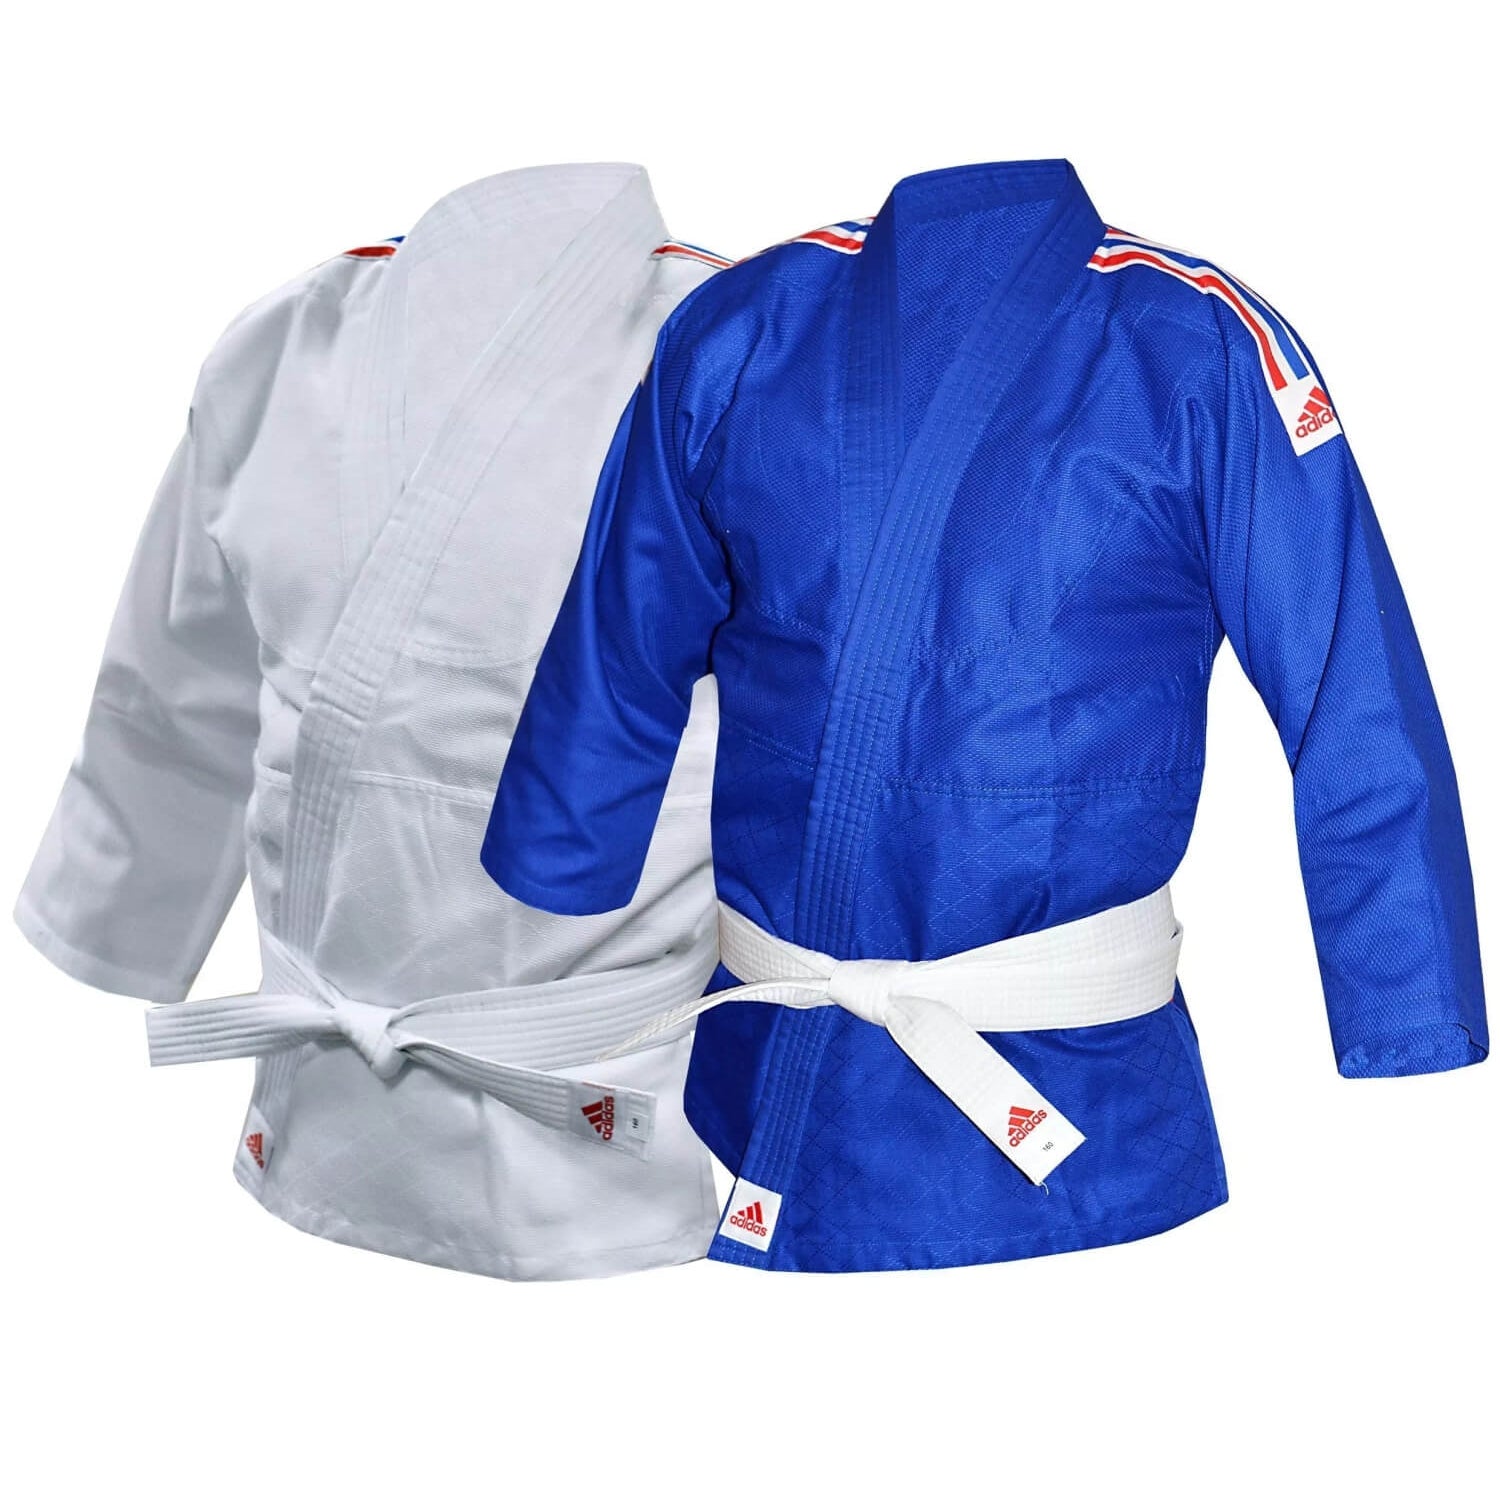 adidas J250 Kids Judo Uniform Gi 9oz Suit + White Belt